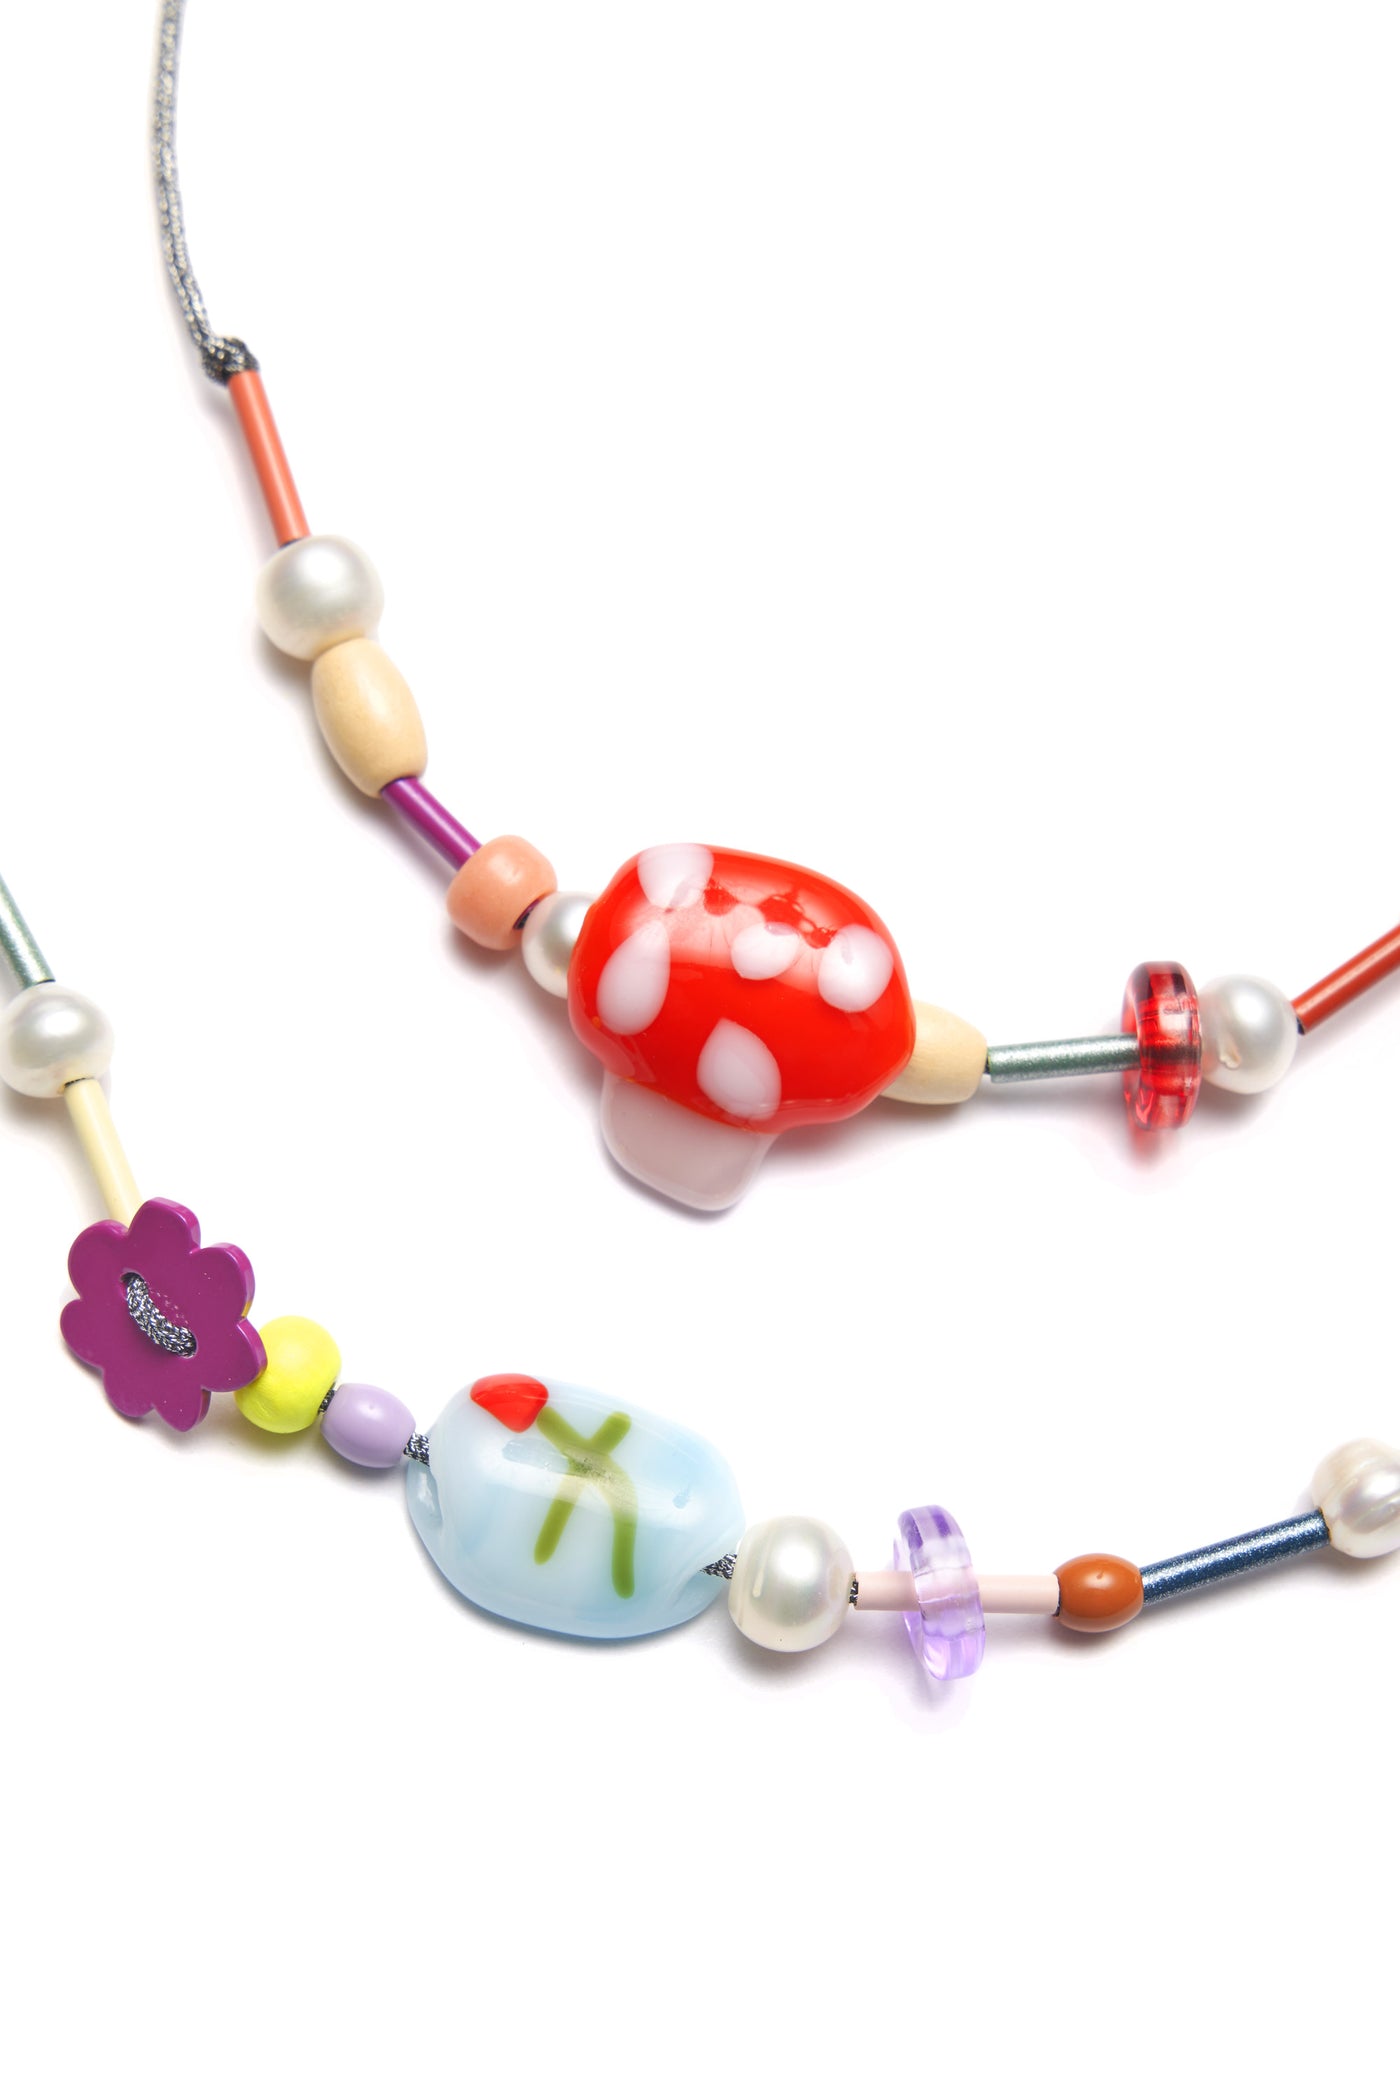 Bianca Mavrick x Lawn Bowls Collaboration Mushroom and Rose Bracelets Glass and Pearl Jewellery